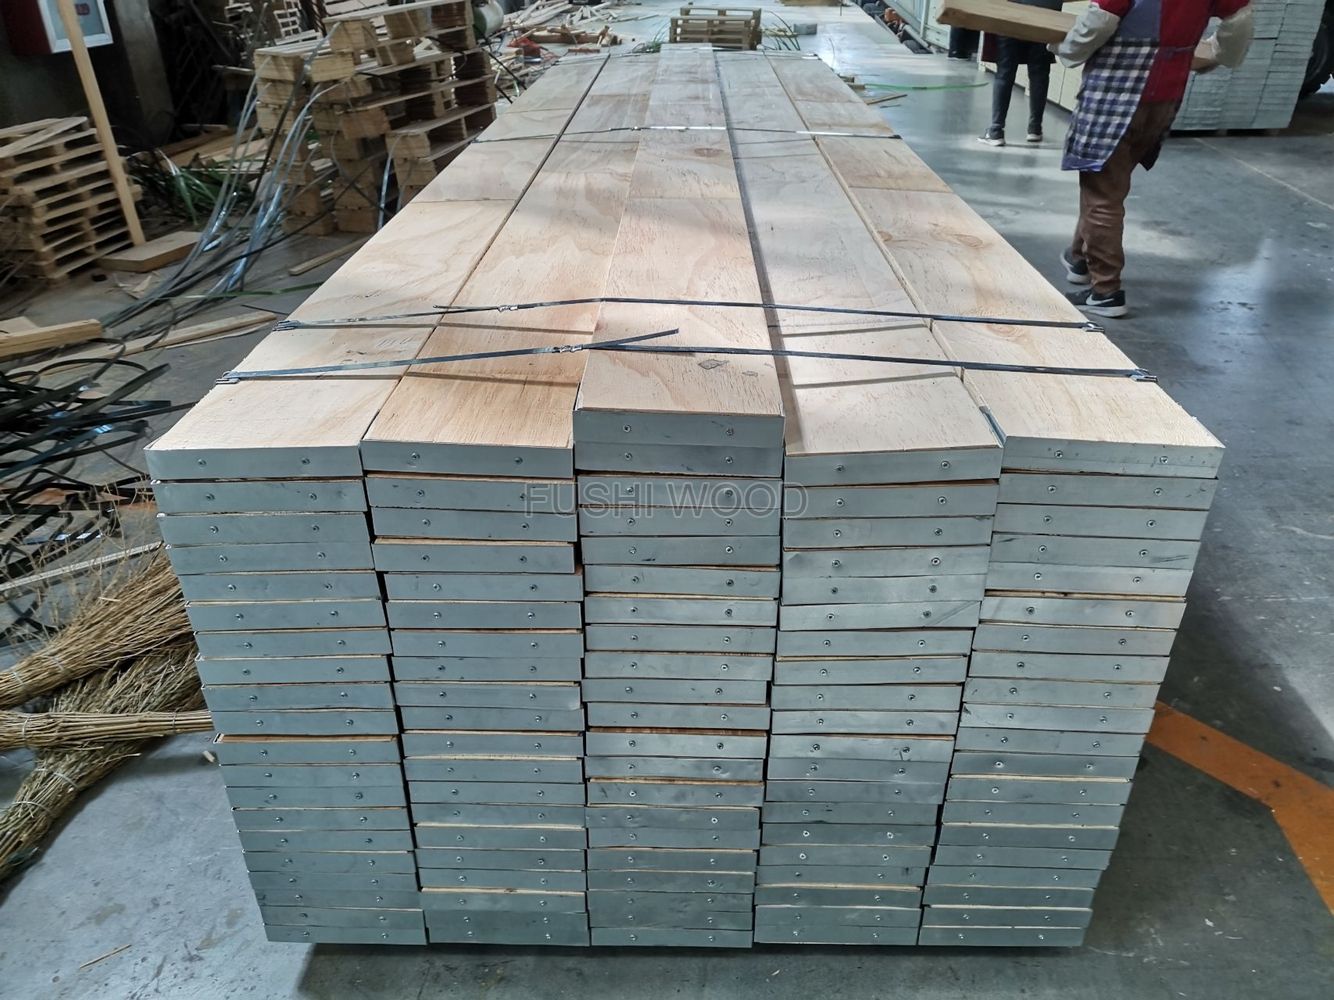 planks wood scaffolding